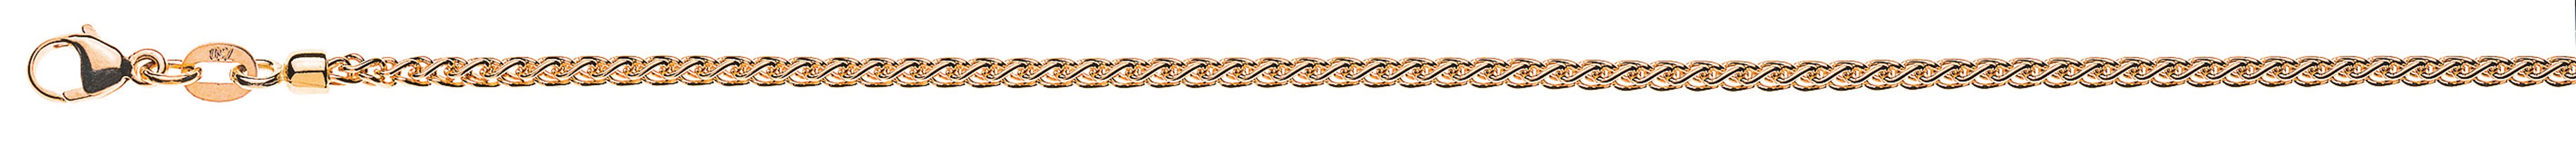 AURONOS Prestige Halskette Roségold 18K Zopfkette 42cm 2.15mm